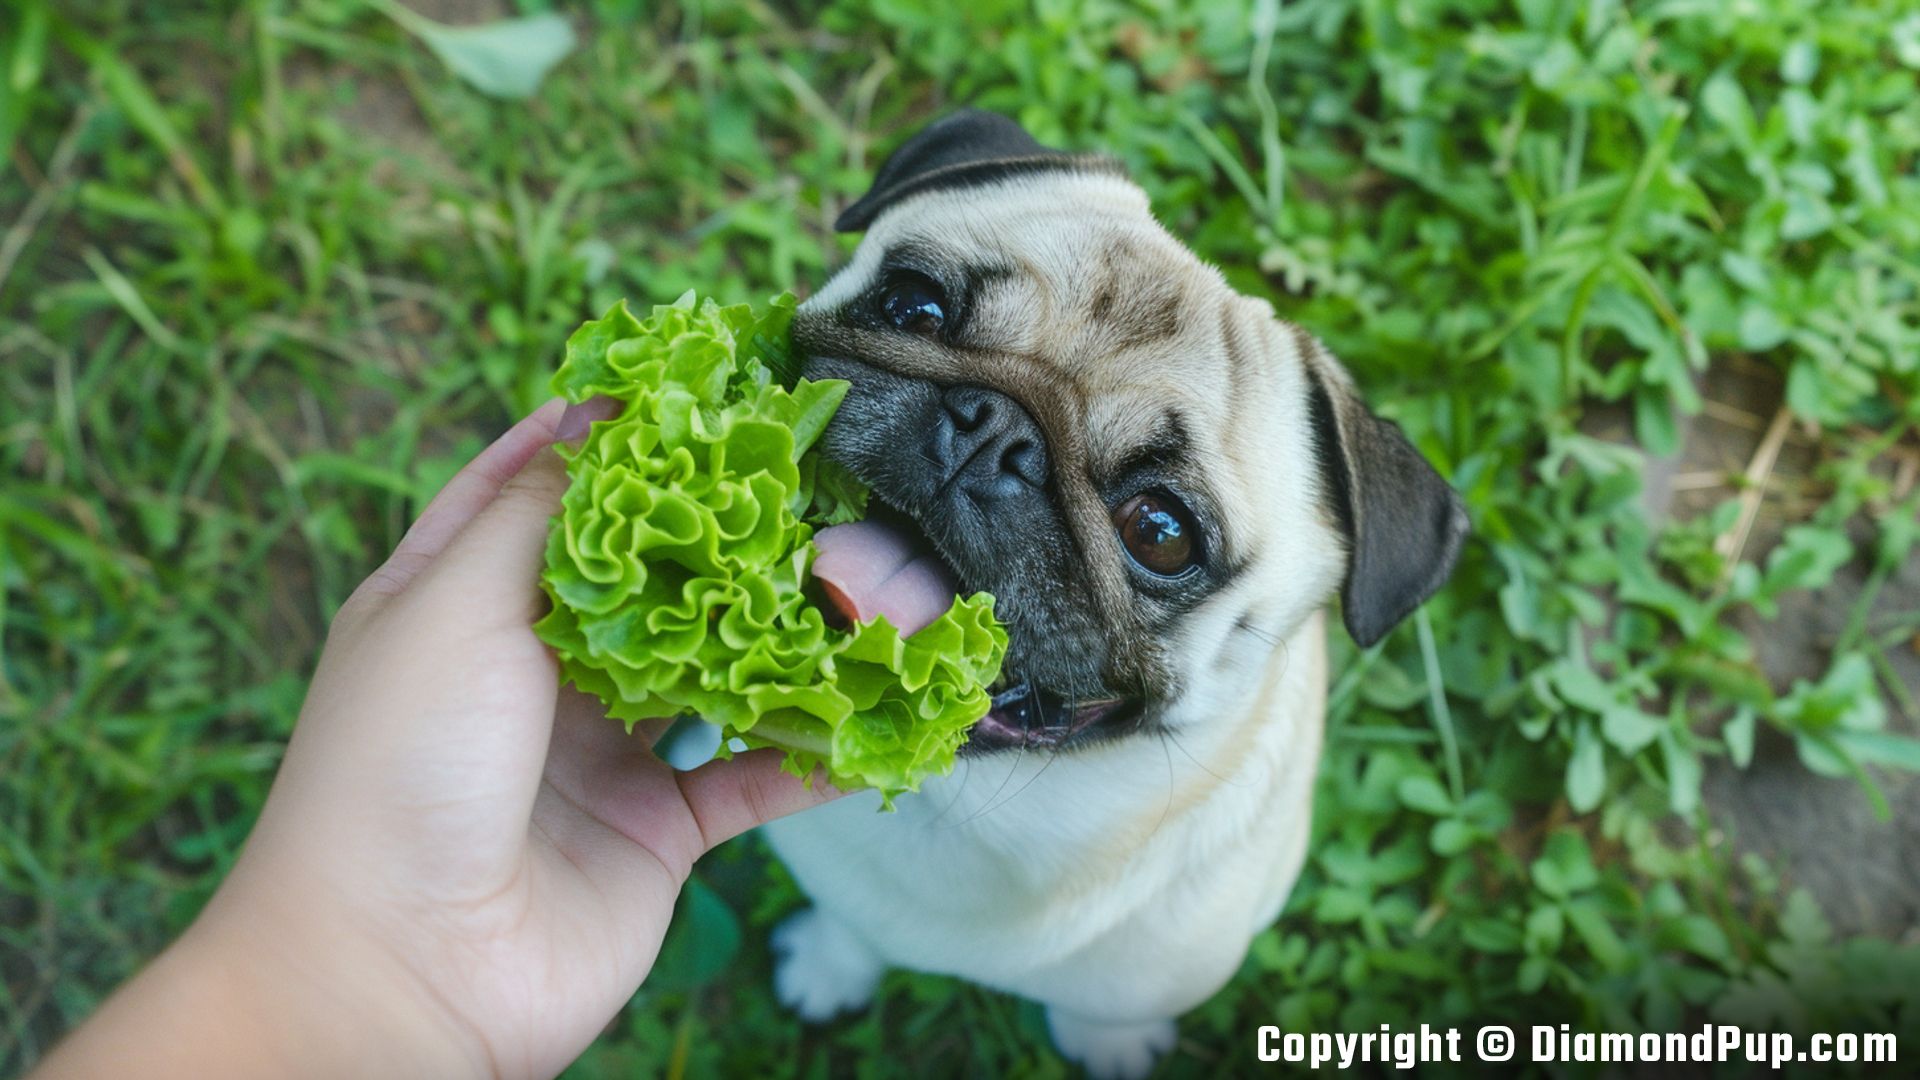 Image of a Playful Pug Eating Lettuce